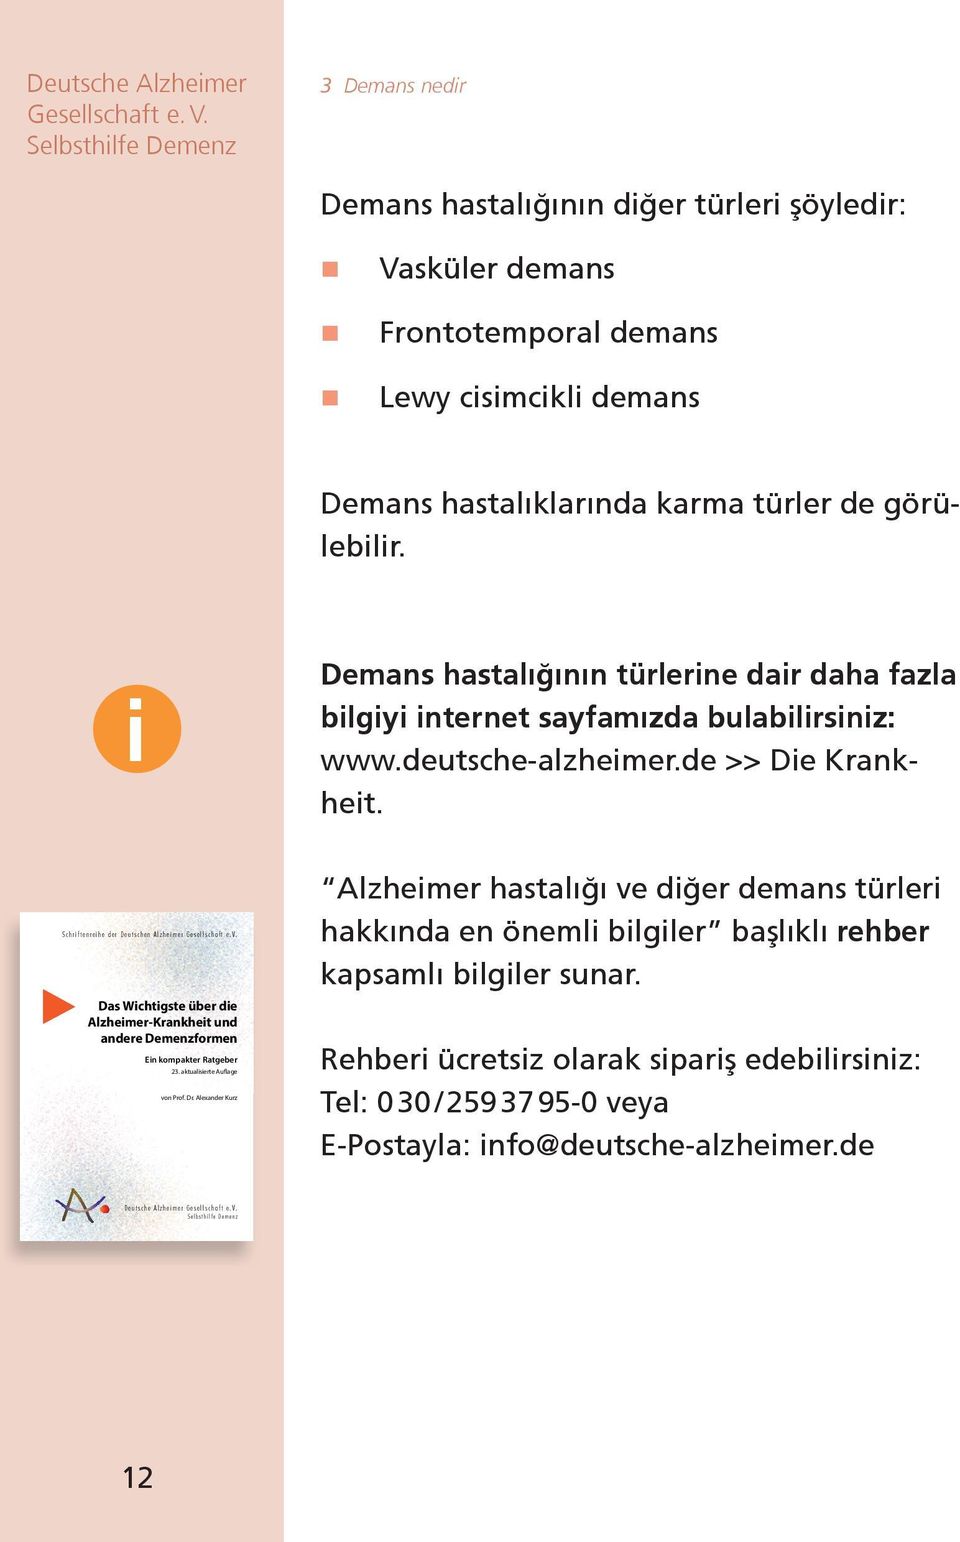 i Demans hastalığının türlerine dair daha fazla bilgiyi internet sayfamızda bulabilirsiniz: www.deutsche-alzheimer.de >> Die Krankheit. Schriftenreihe der Deutschen Alzheimer Gesellschaft e. V.